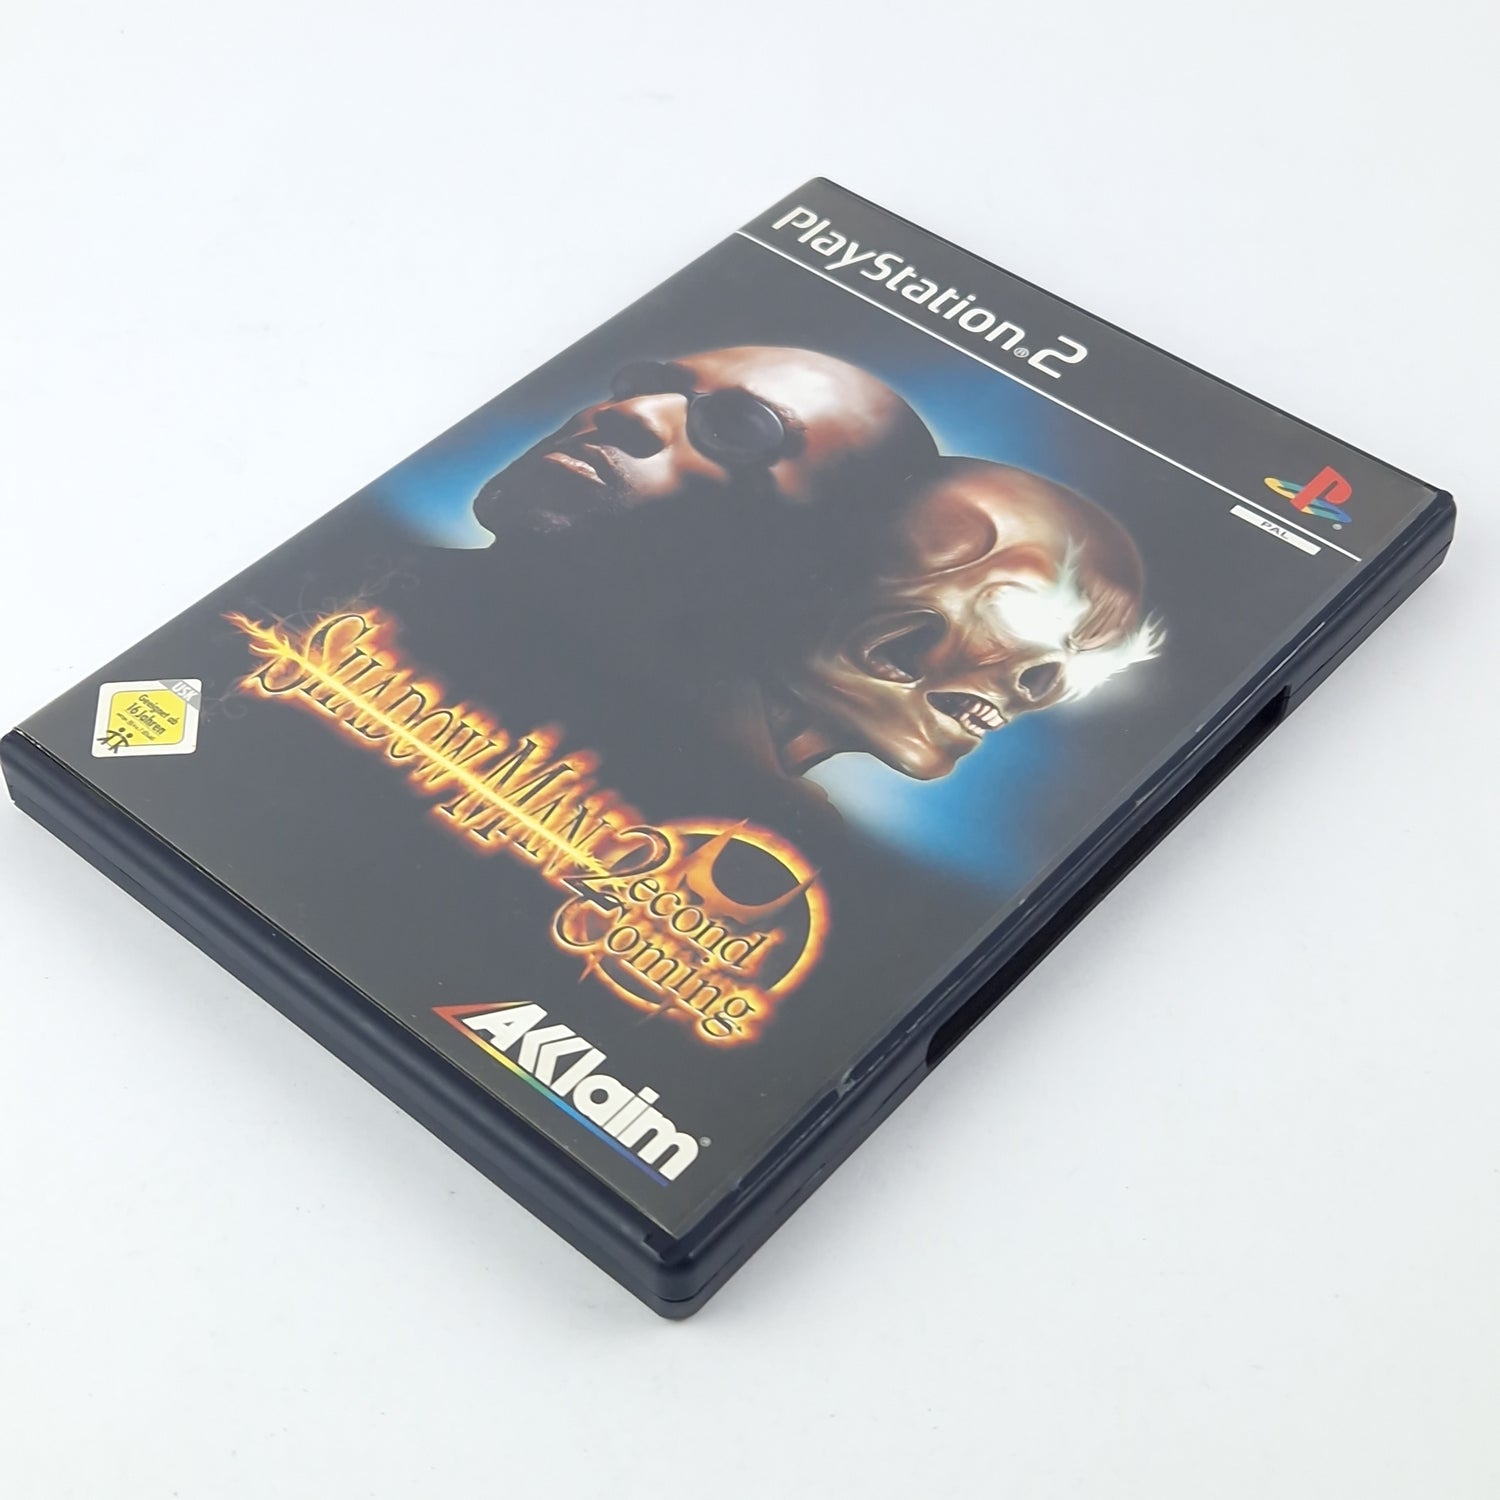 Playstation 2 game: Shadow Man 2econd coming - CD manual OVP cib / SONY PS2